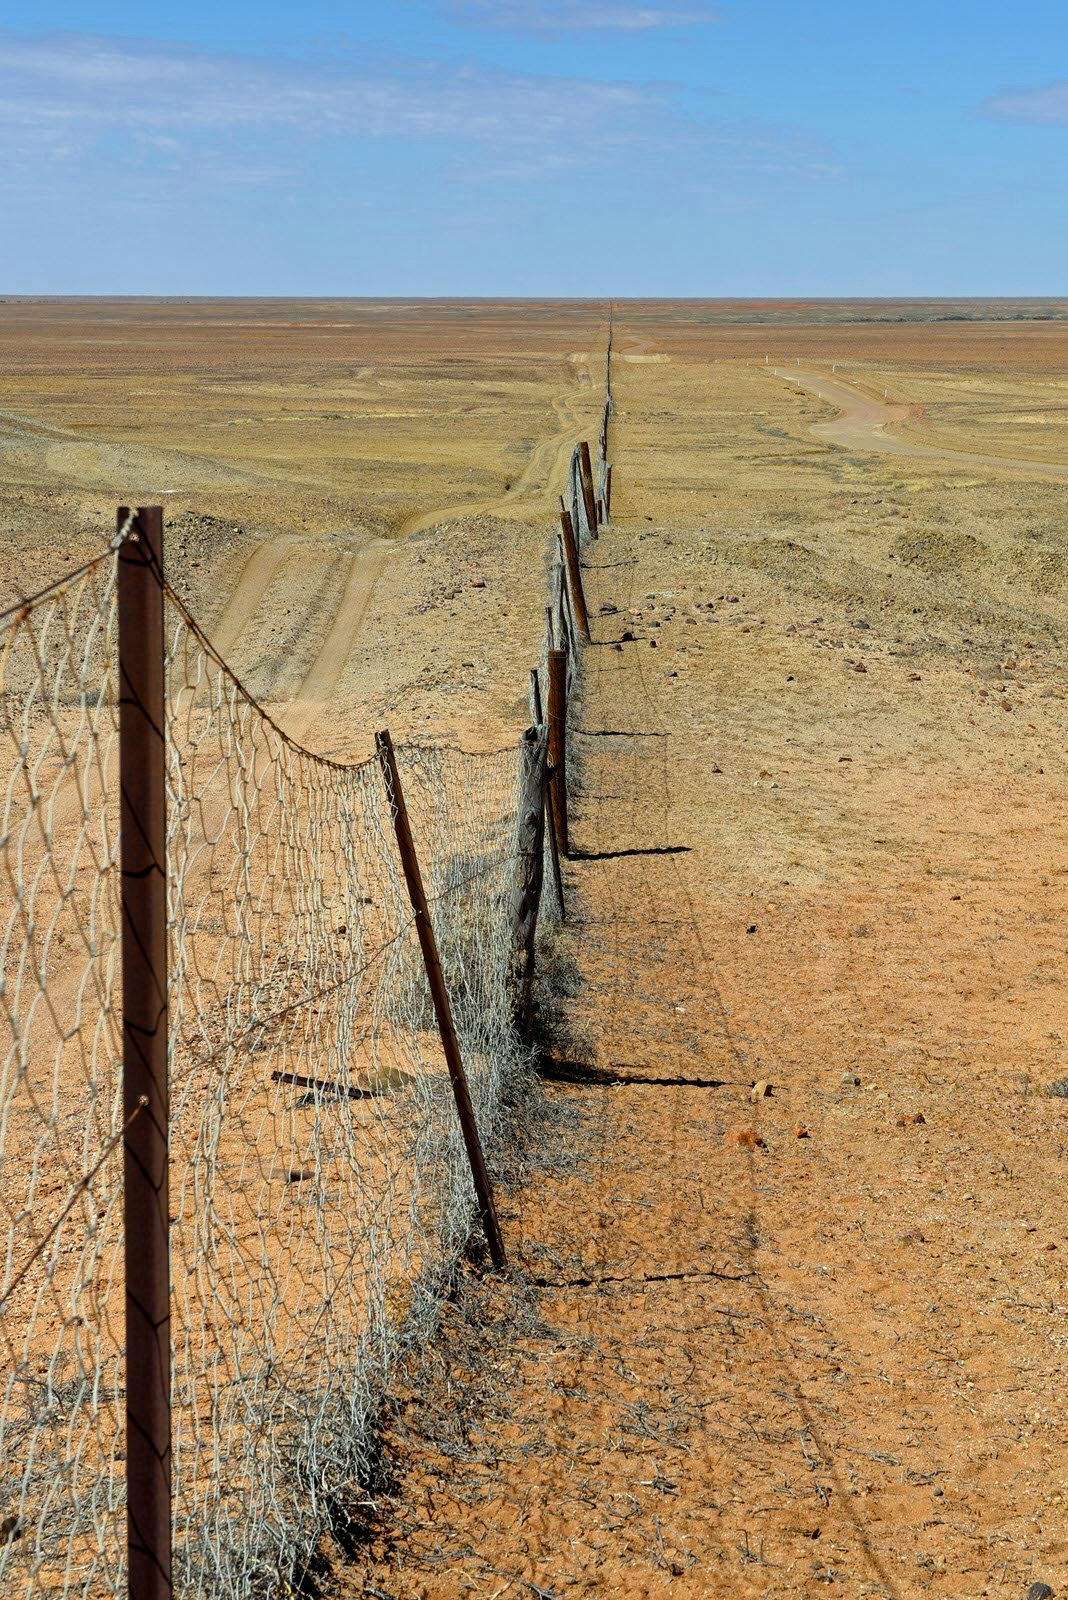 Dingo Fence crossing Australia's interior to protect livestock roaming vast cattle stations